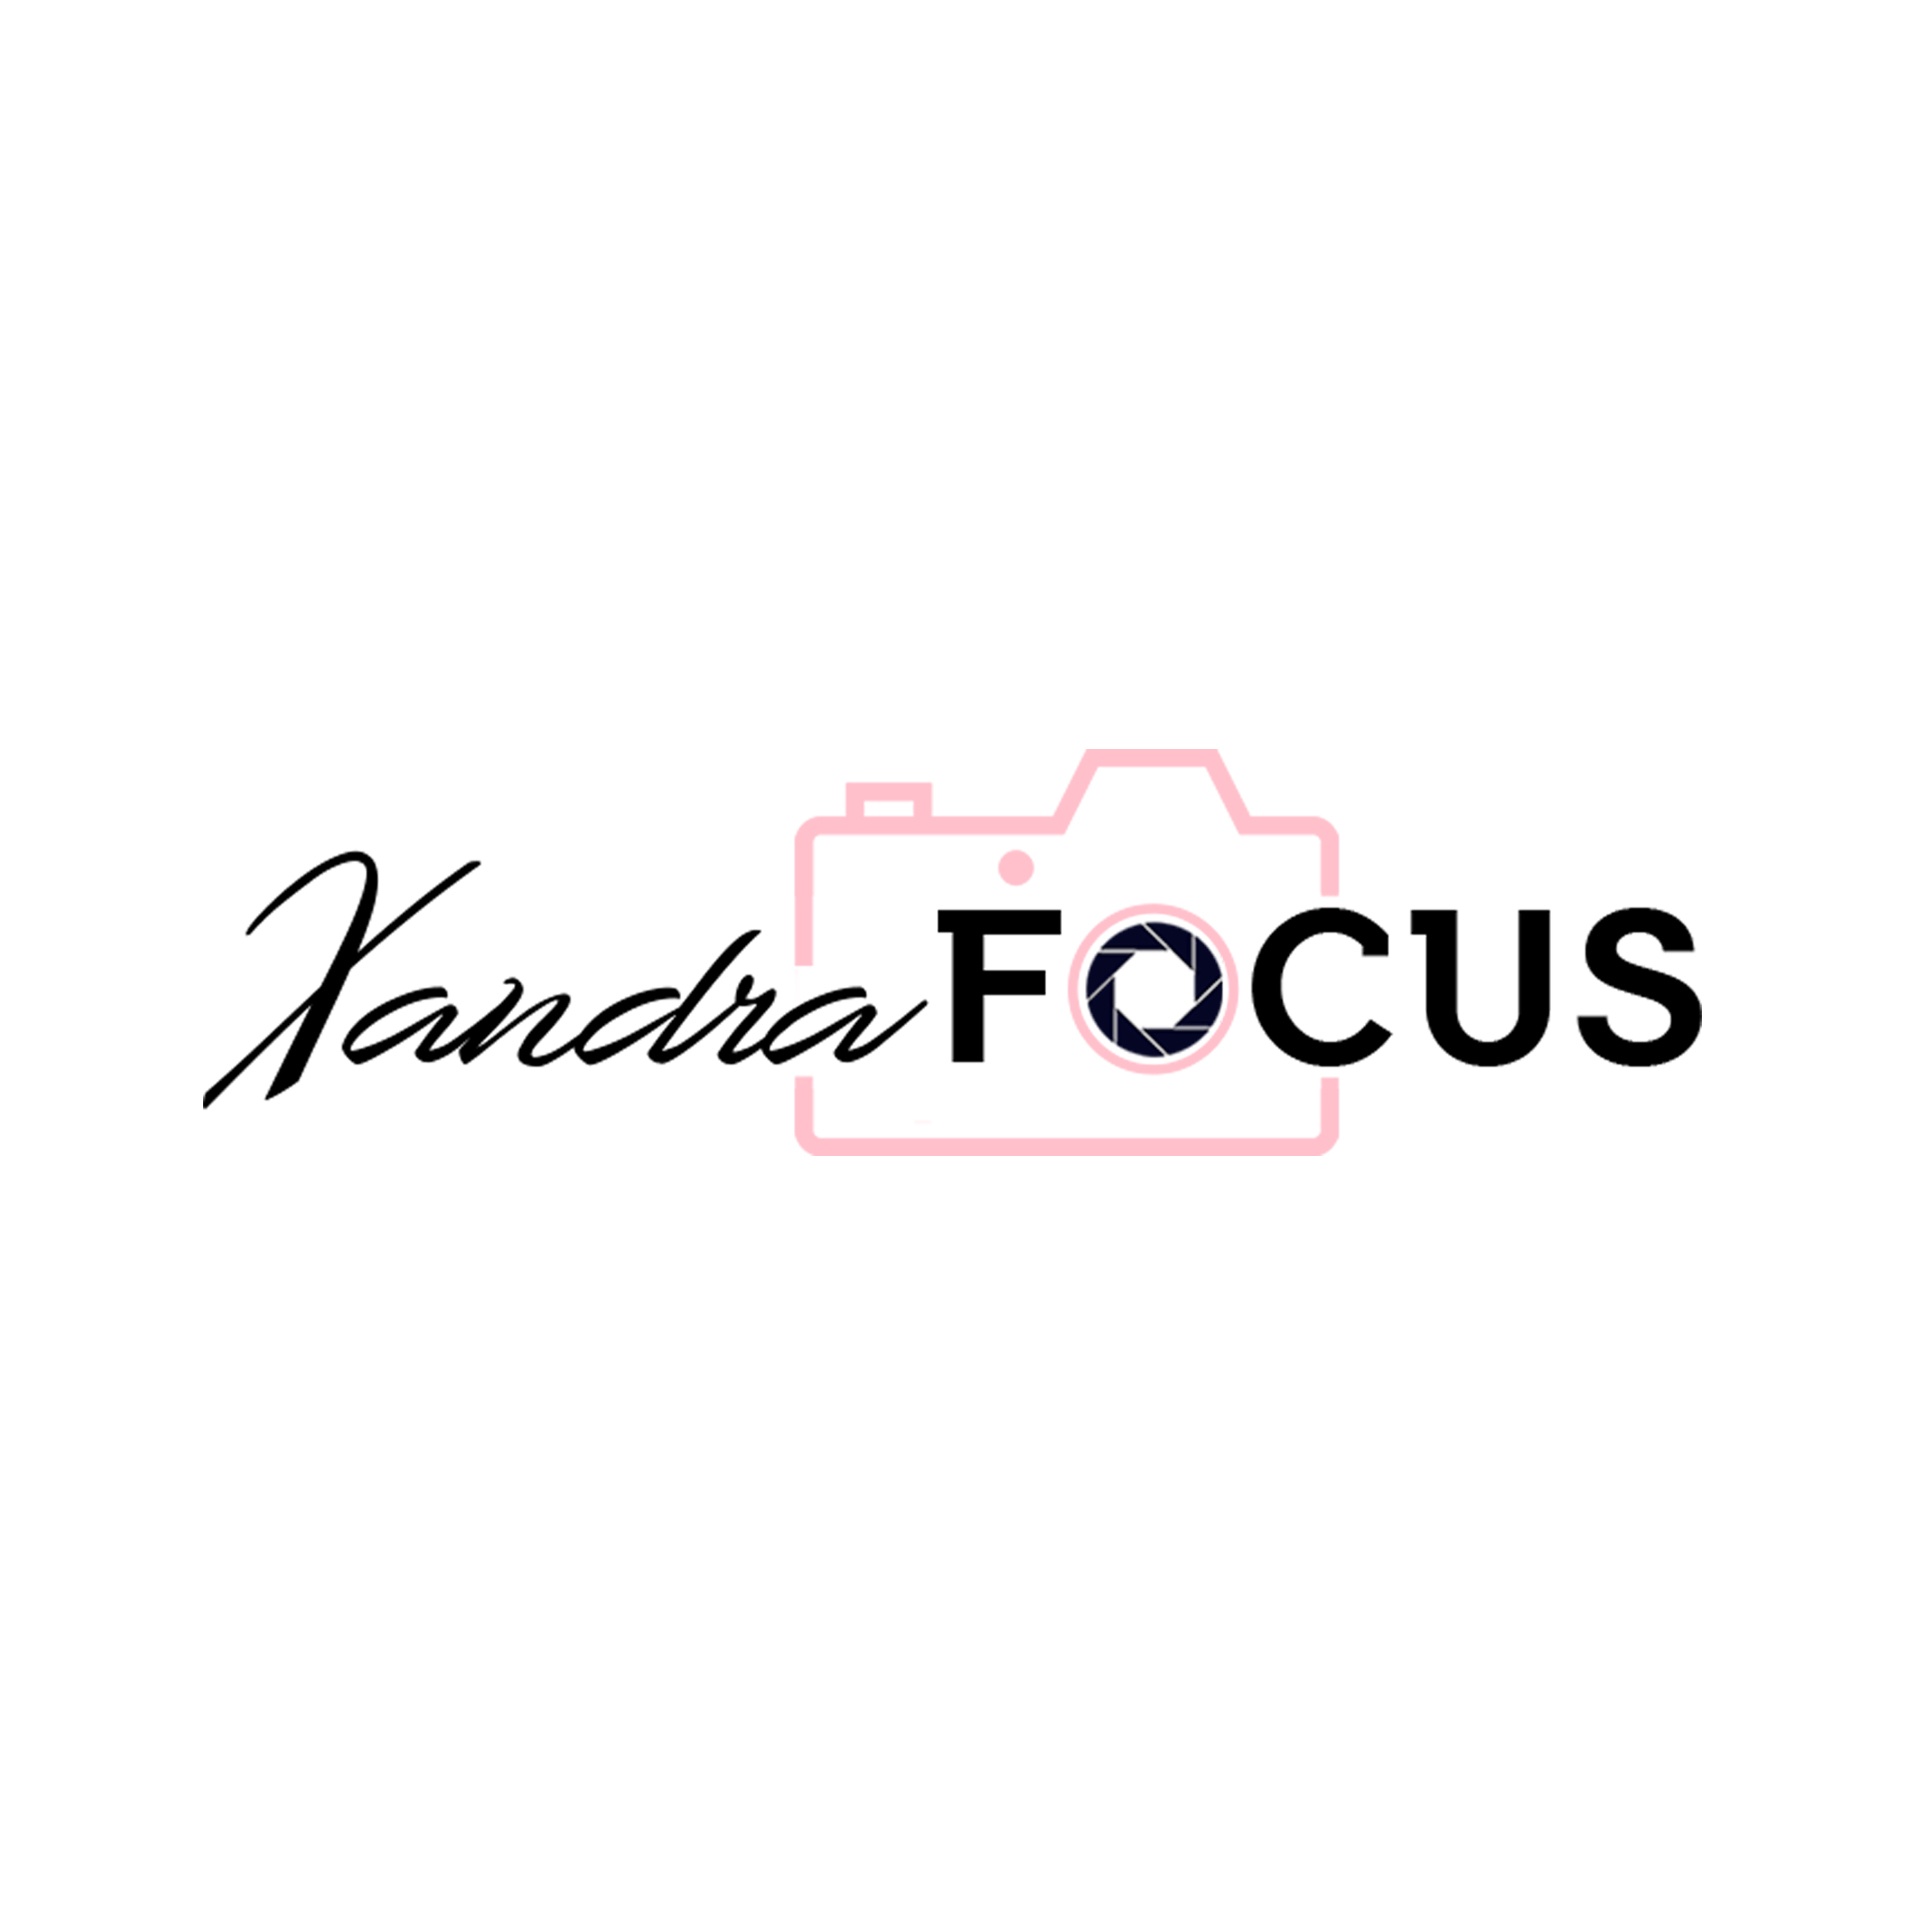 Xandra Focus Logo